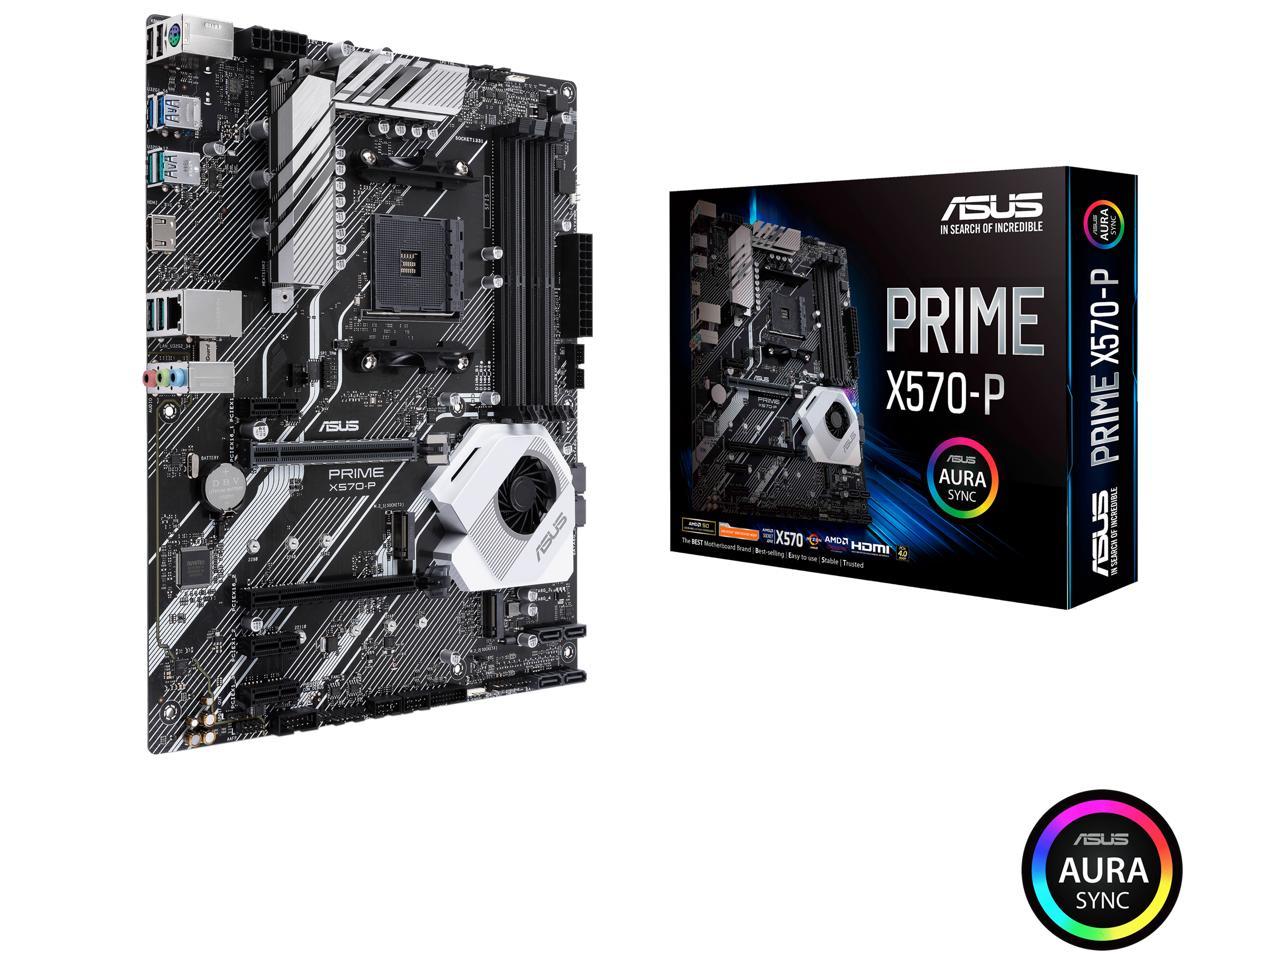 ASUS Prime X570-P AM4 Motherboard $125